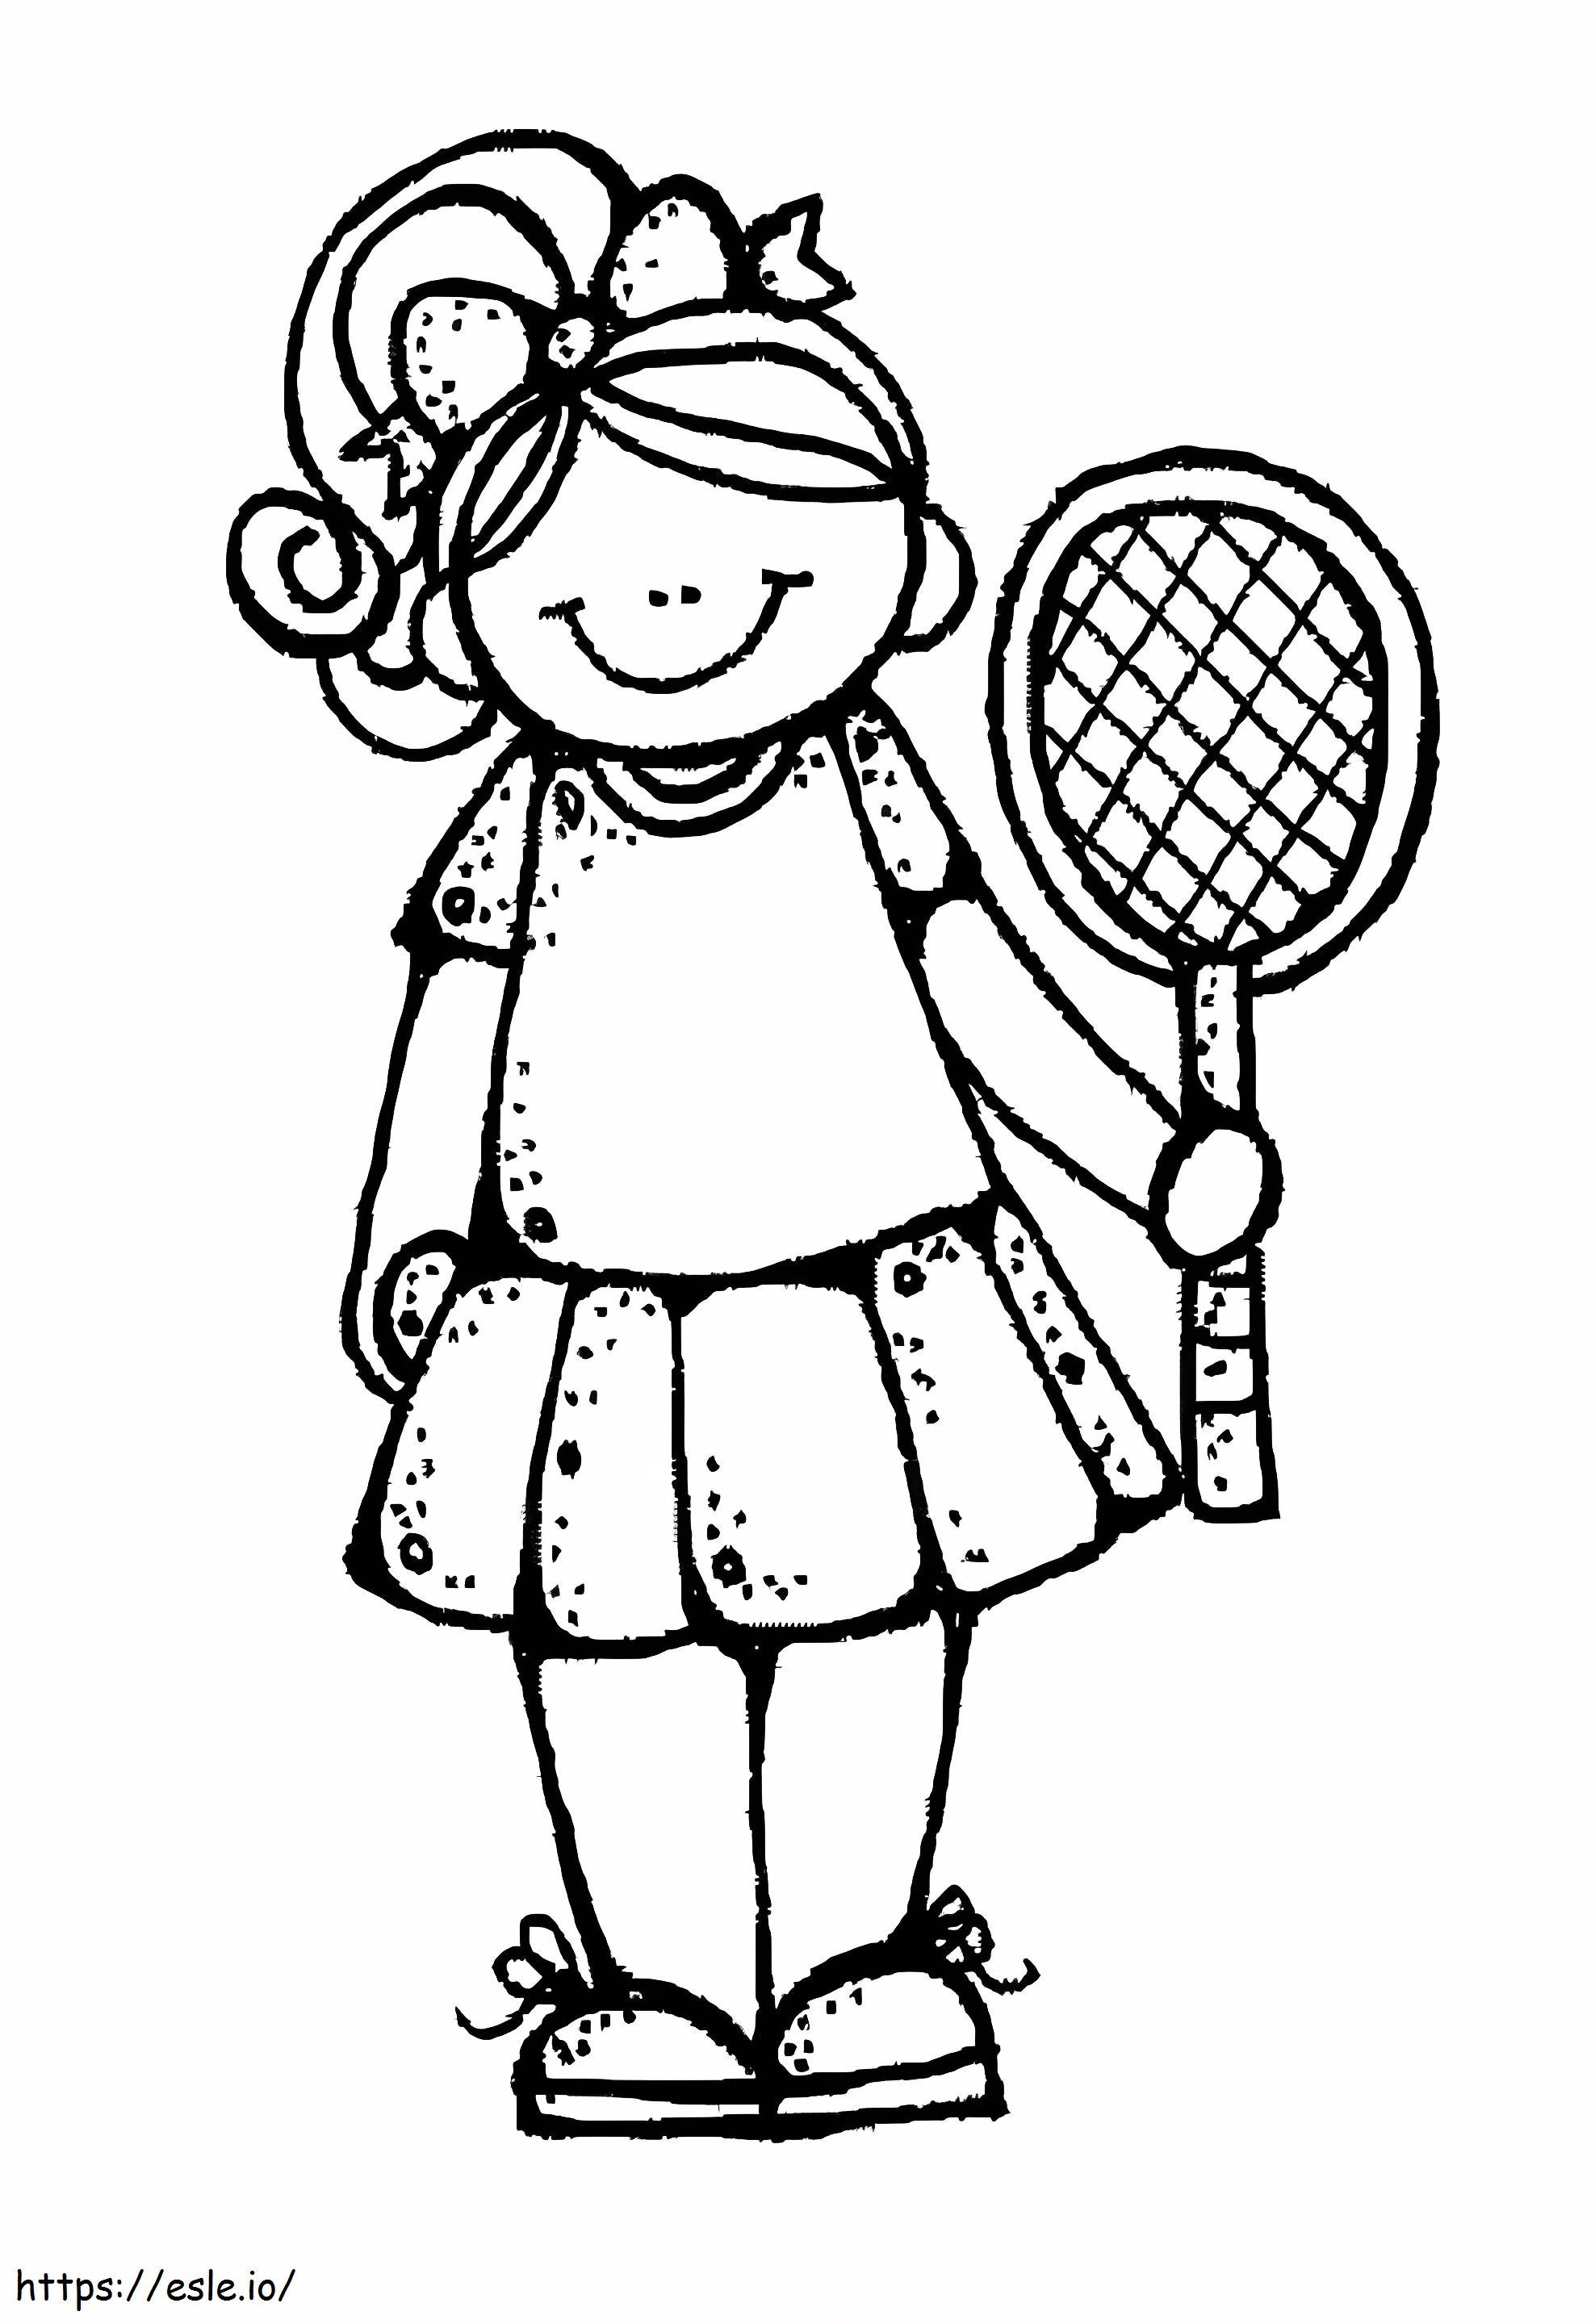 Tenisçi Kız Melonheadz boyama